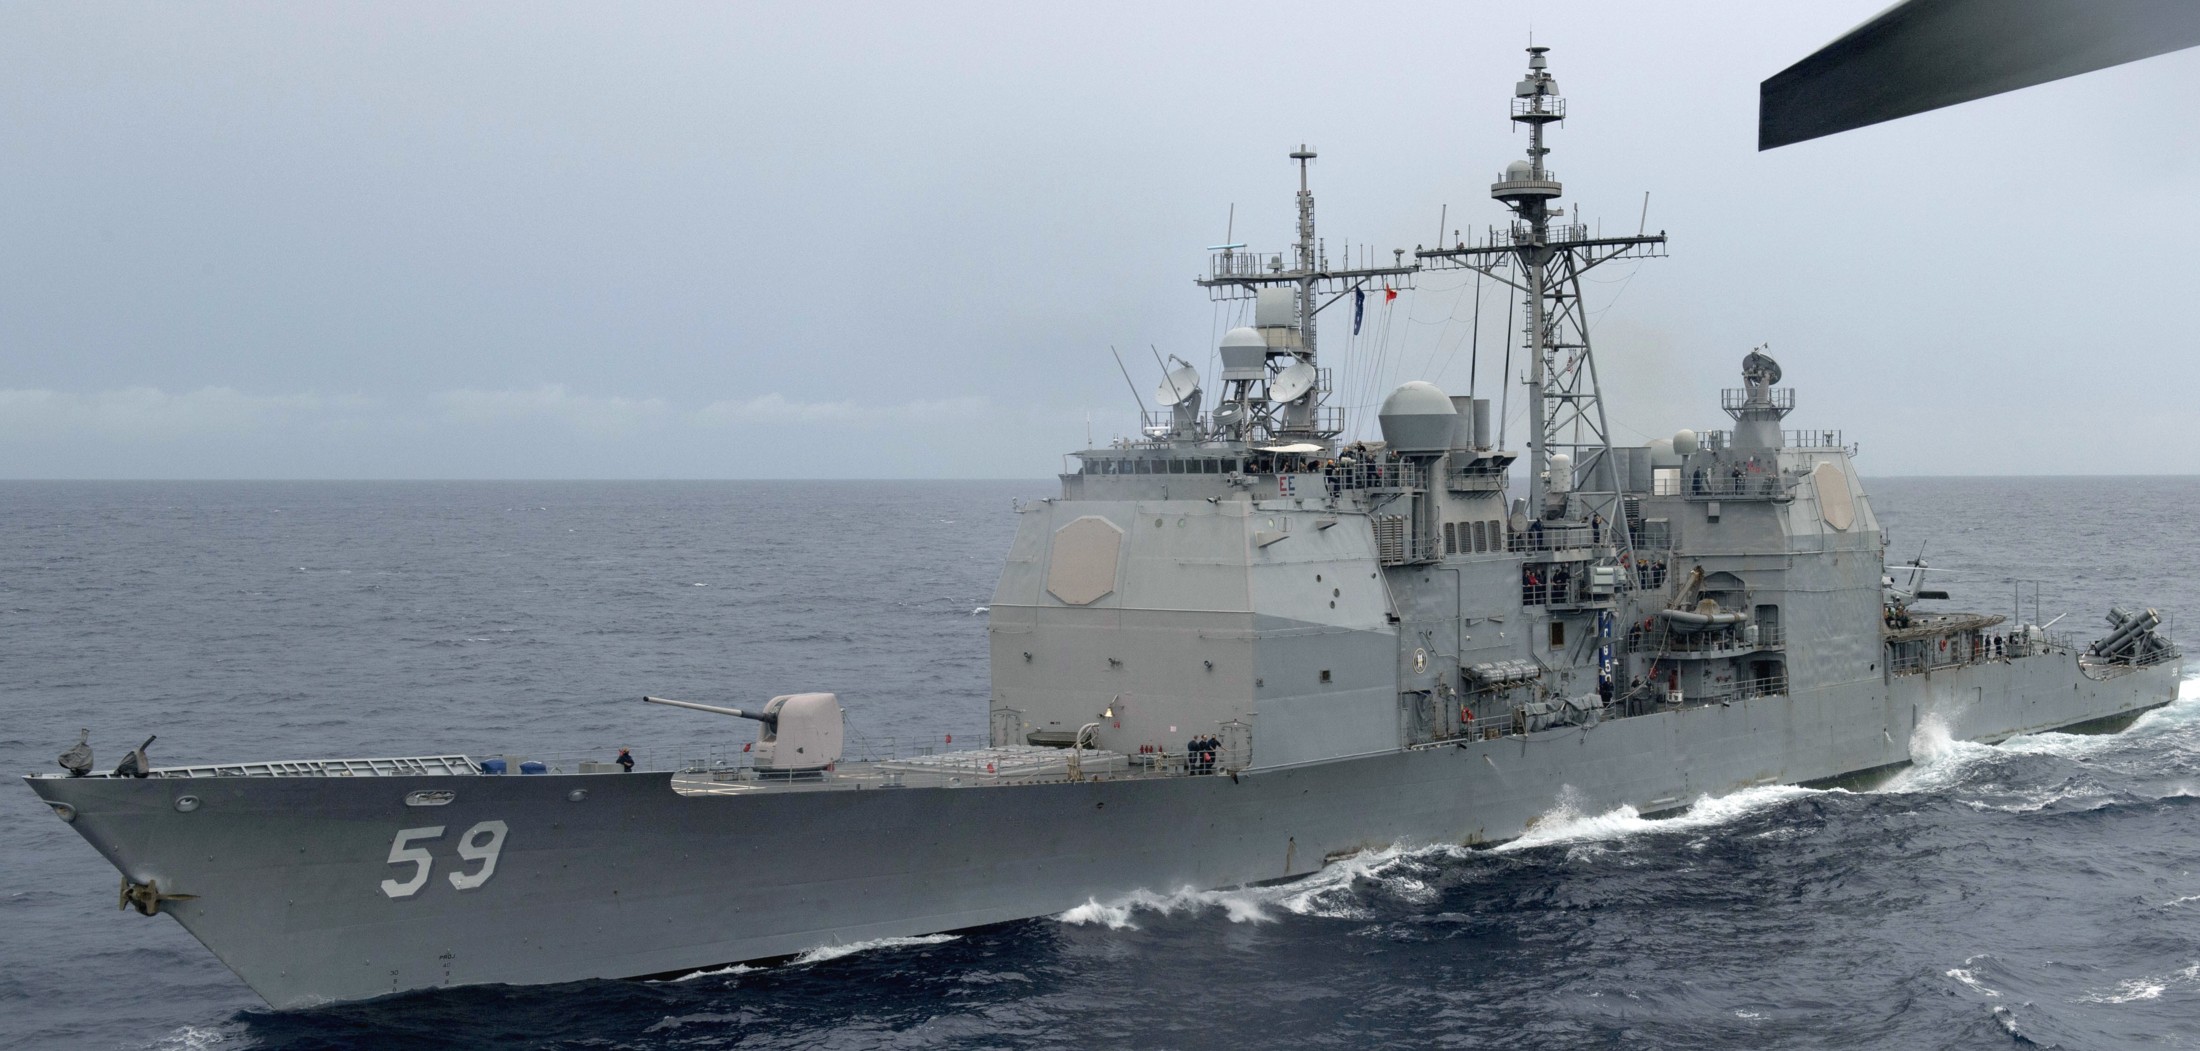 cg-59 uss princeton ticonderoga class guided missile cruiser aegis us navy 102